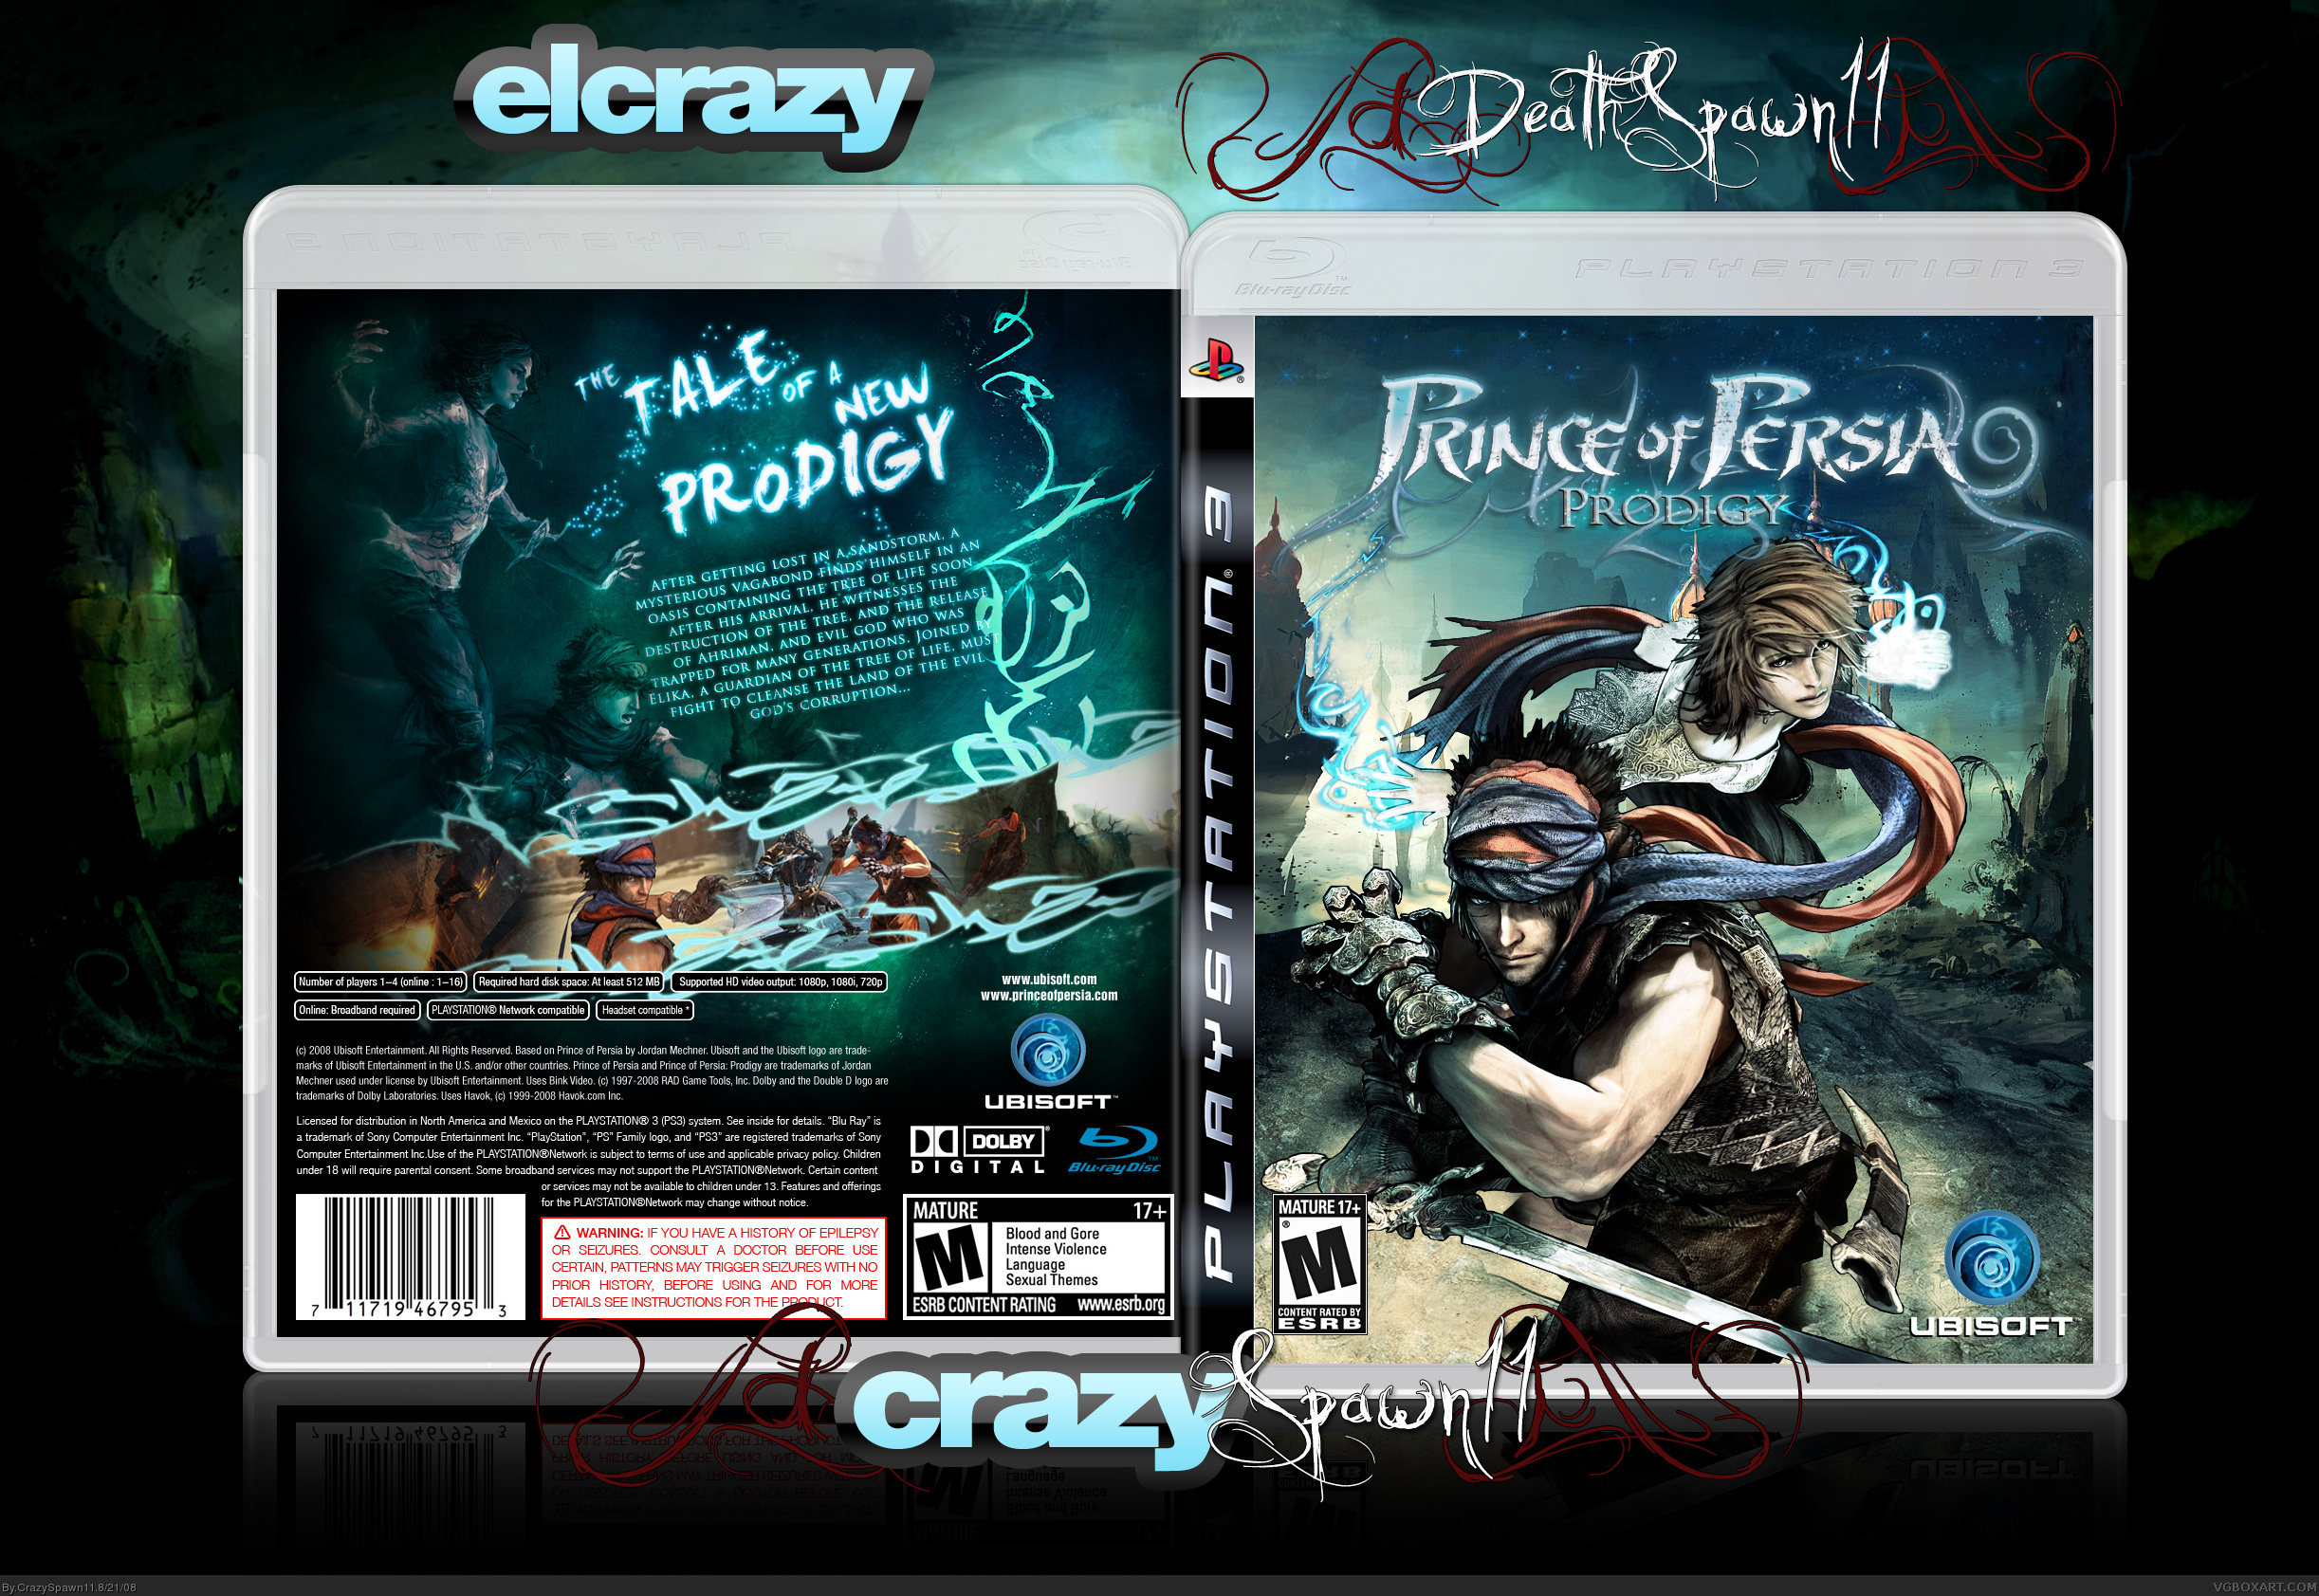 Prince Of Persia: Prodigy box cover